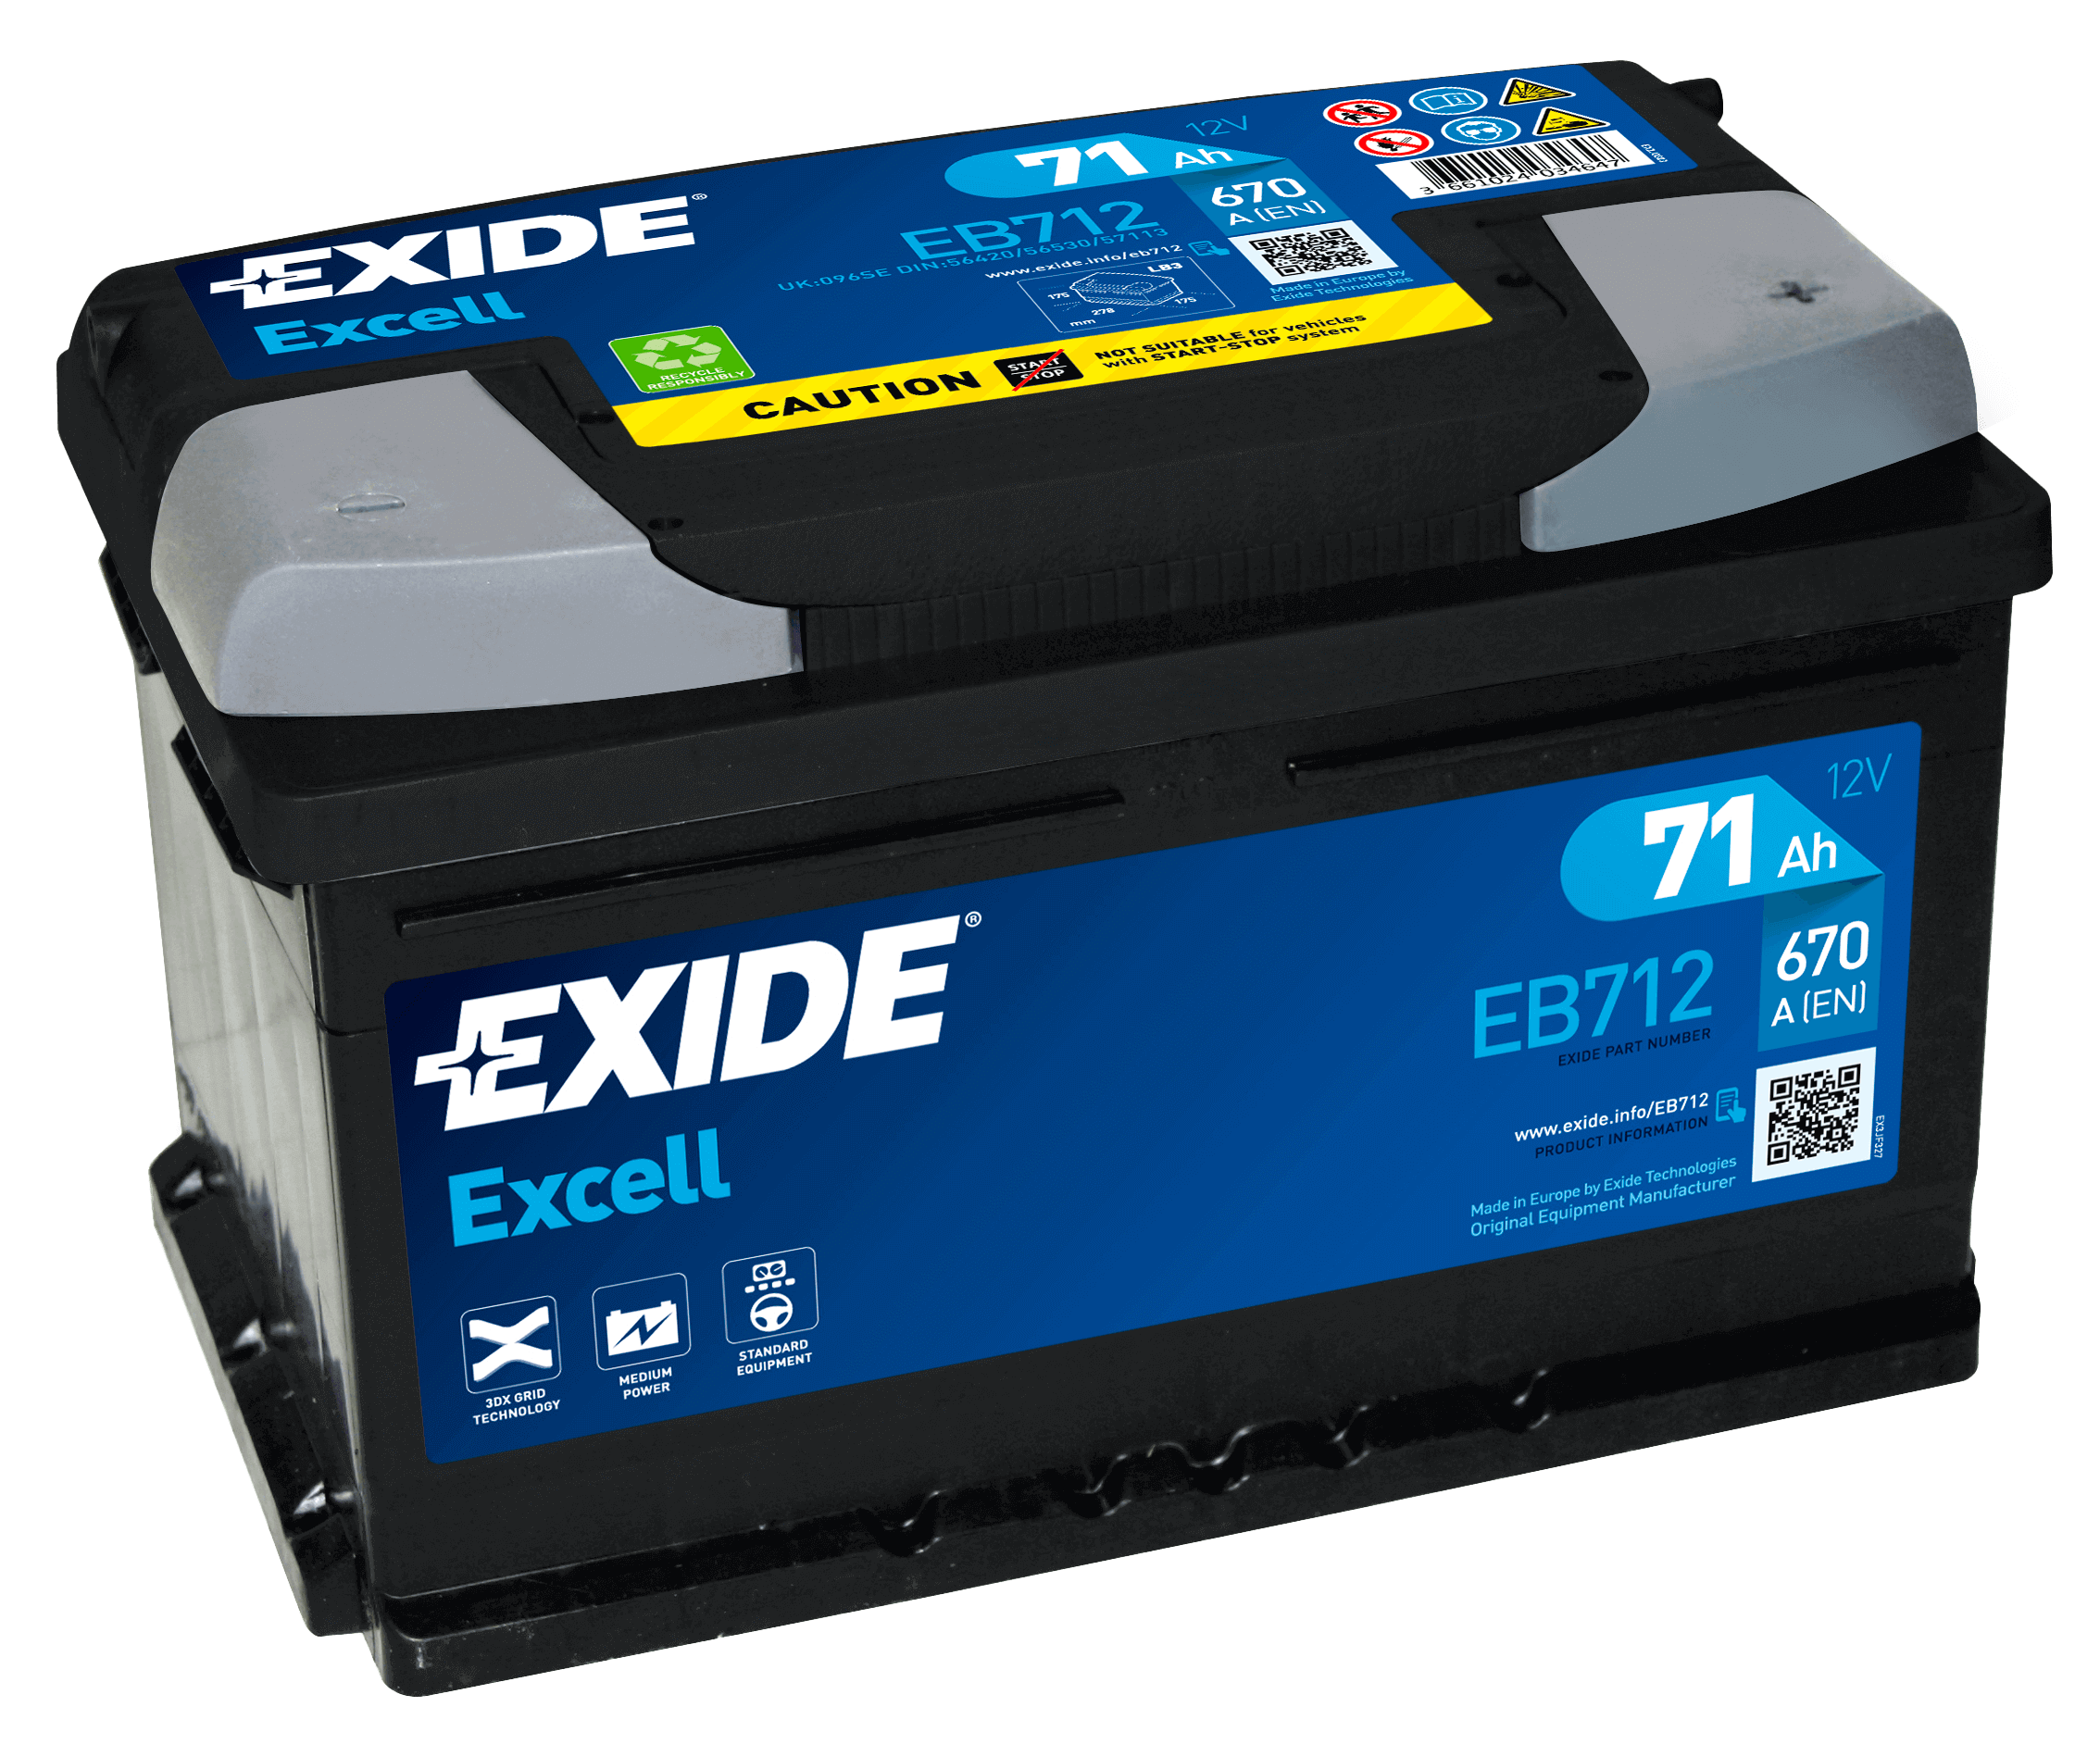 Exide EK700 Start-Stop AGM 12V 70Ah 760A Autobatterie, Starterbatterie, Boot, Batterien für